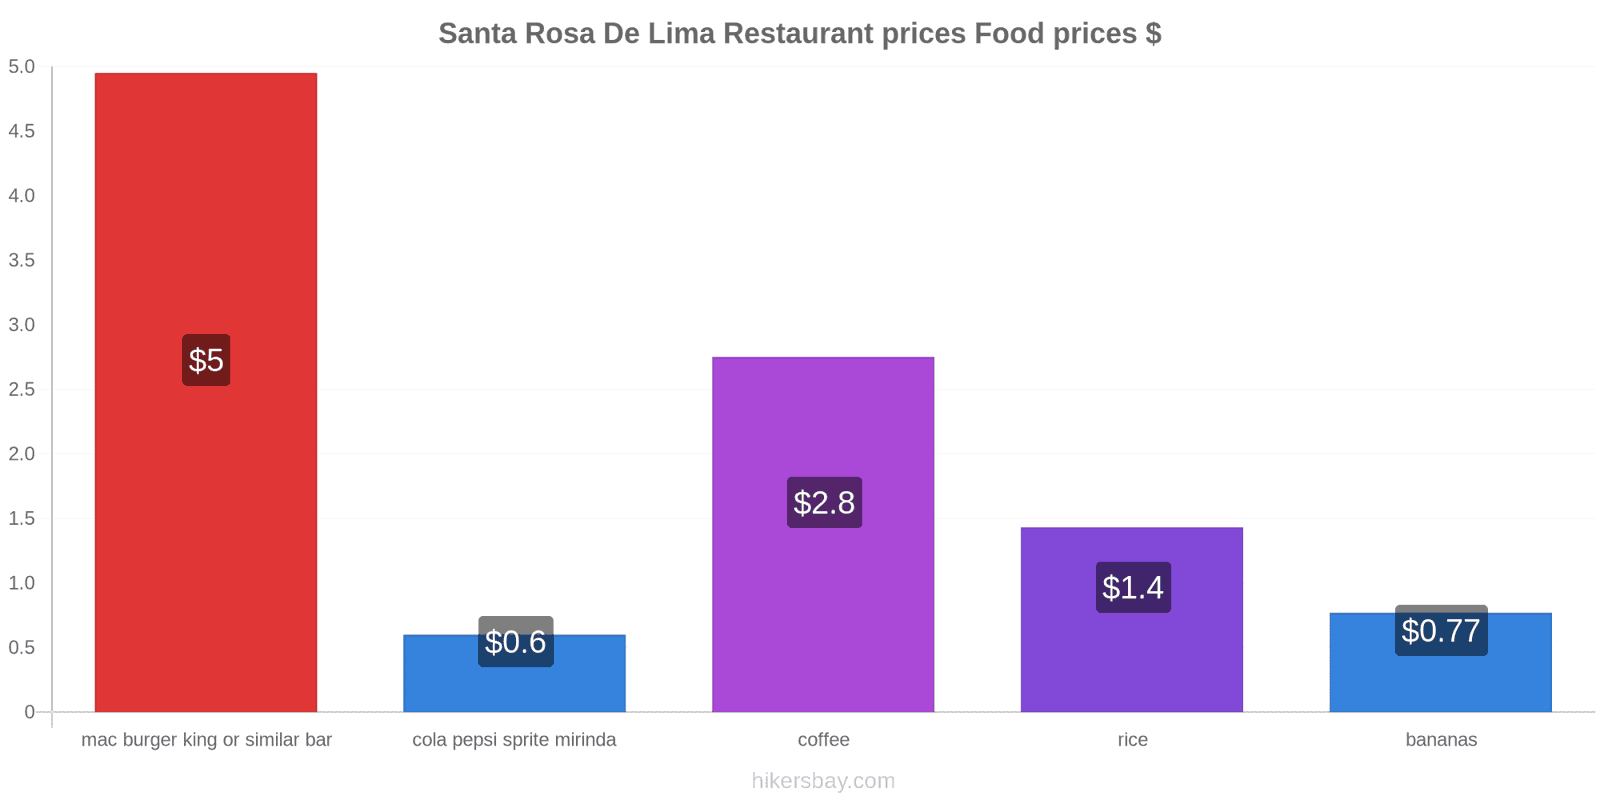 Santa Rosa De Lima price changes hikersbay.com